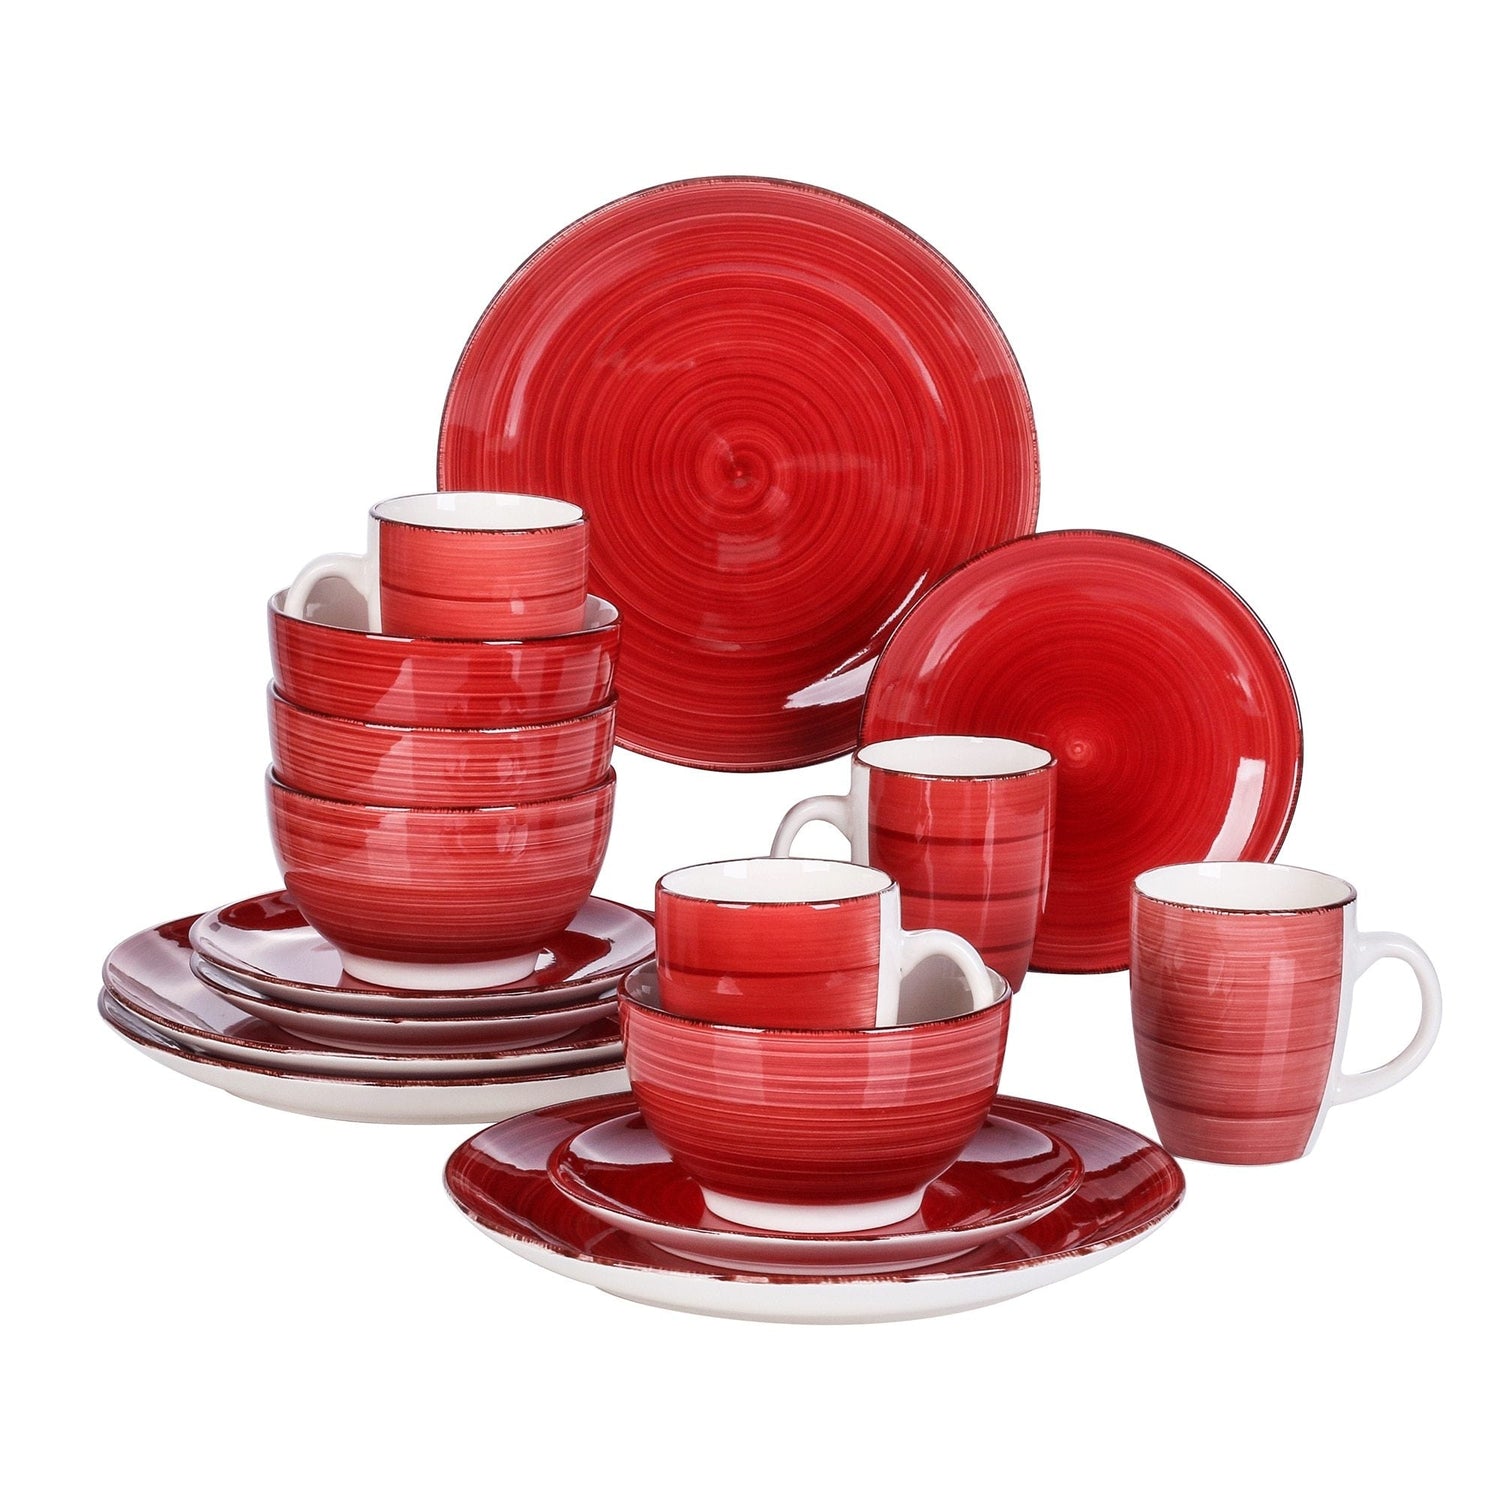 Bella-R 16-Pieces Porcelain Dinner Set - Nordic Side - 16, BellaR, Ceramic, Dinner, Look, Pieces, Plate, PlateBowlMug, PlateDessert, Porcelain, Set, Vancasso, Vintage, with